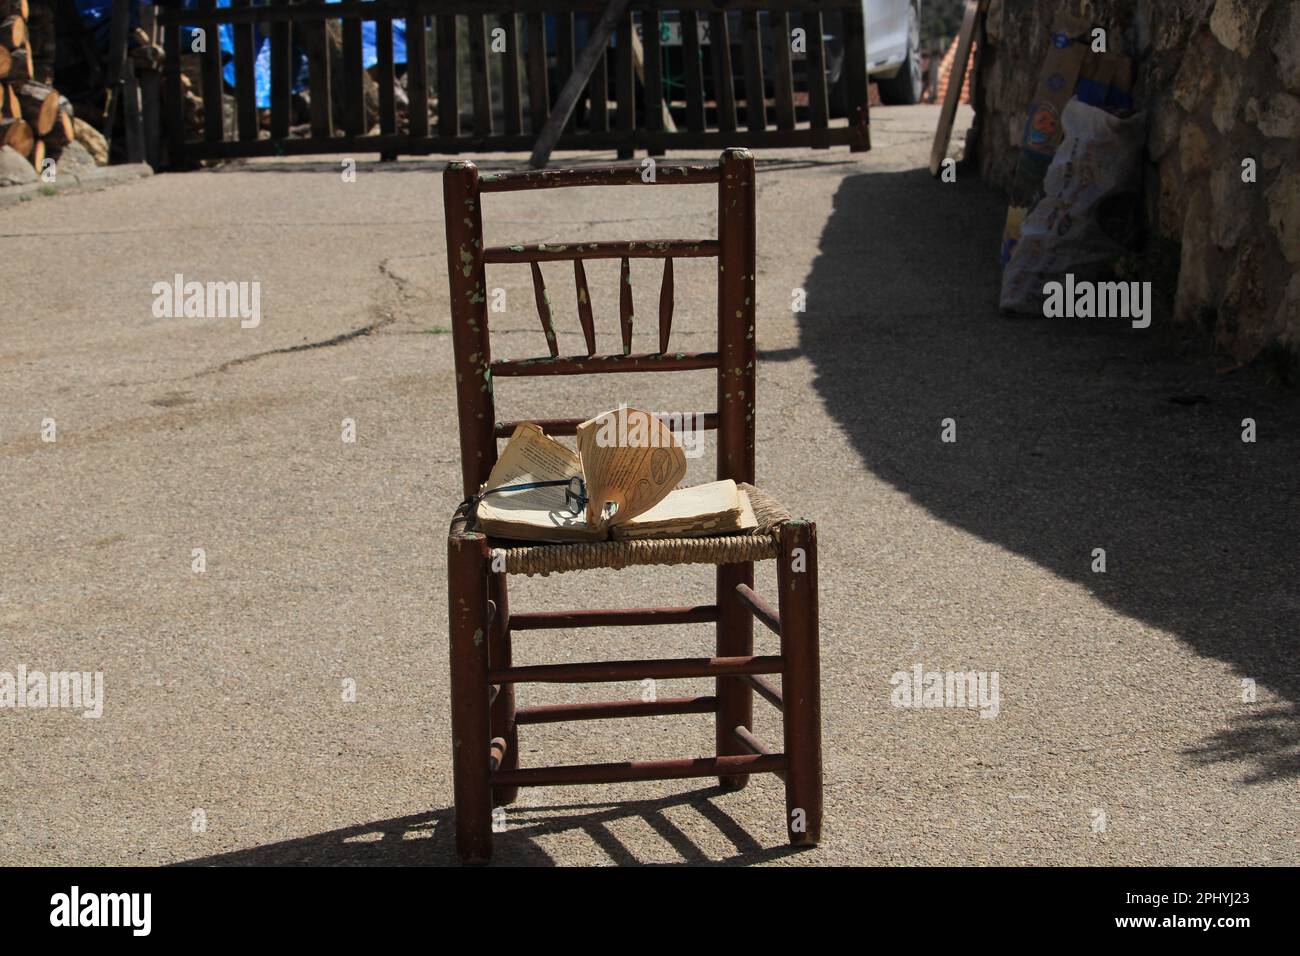 La soledad de una silla rota Stock Photo